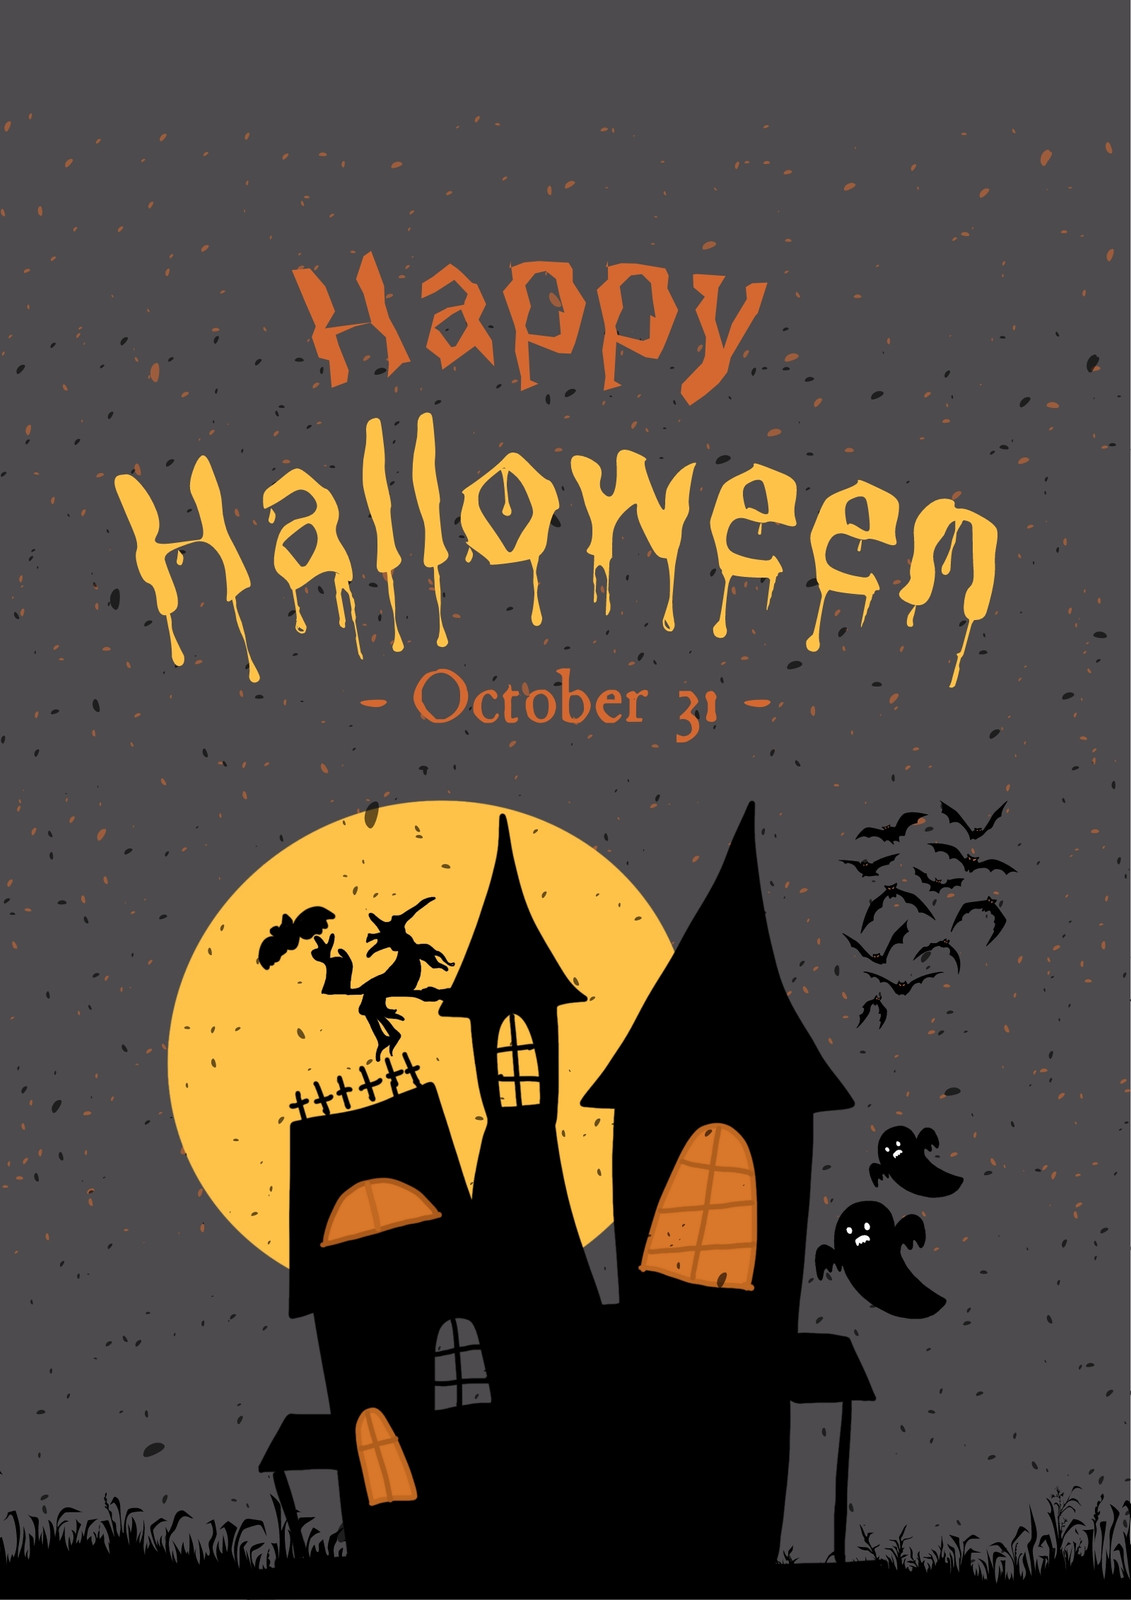 Free custom printable Halloween poster templates